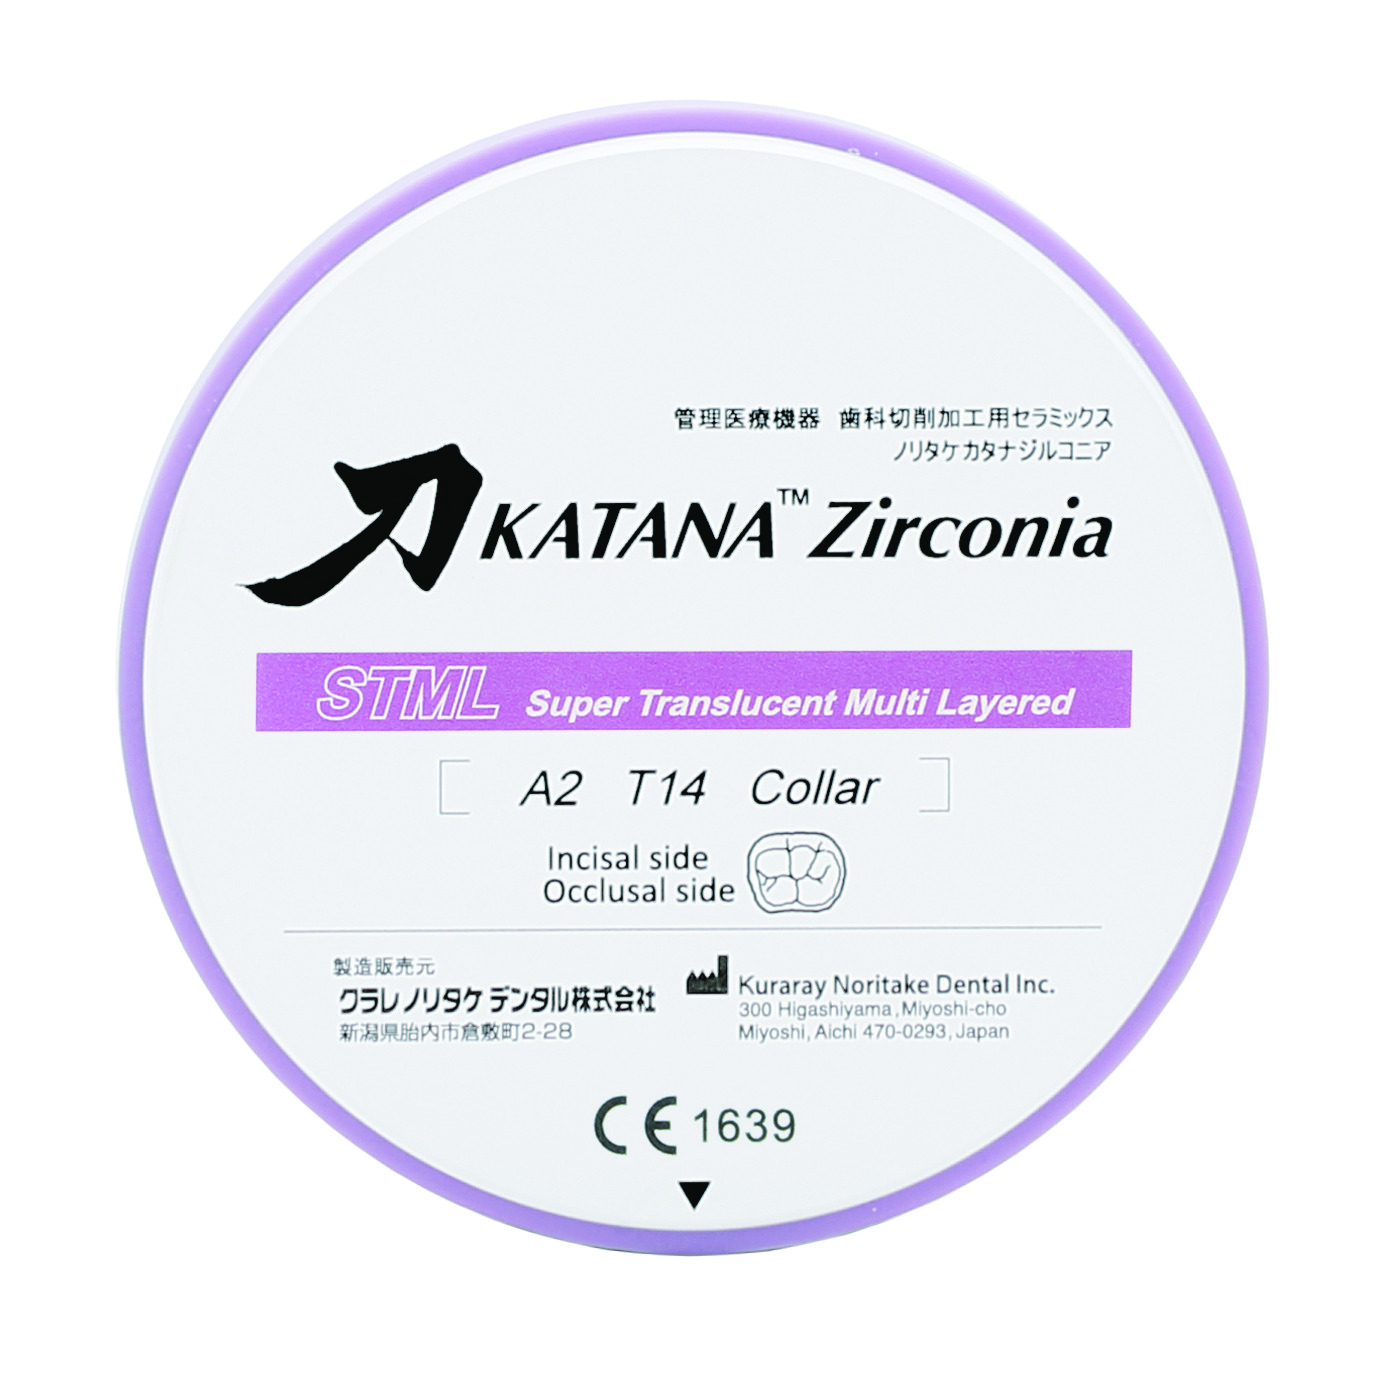 Katana Zr Stml A1 Disco 98,5X14 Mm